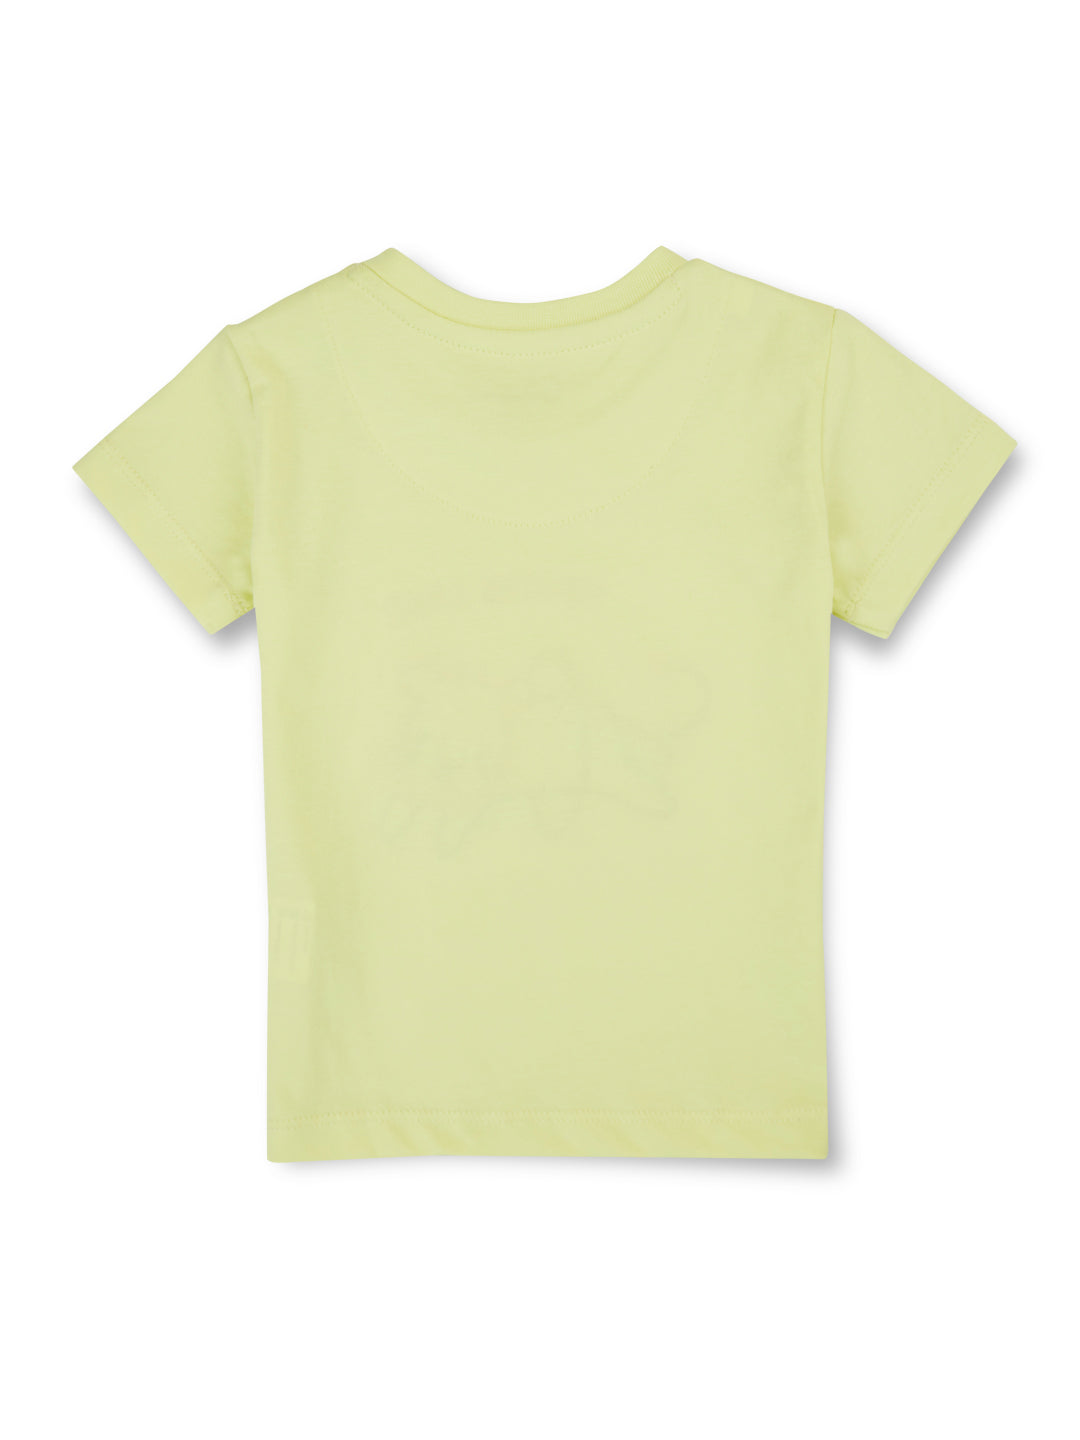 GJ Baby Boys Yellow Cotton Applique Round Neck Half Sleeves T-Shirt